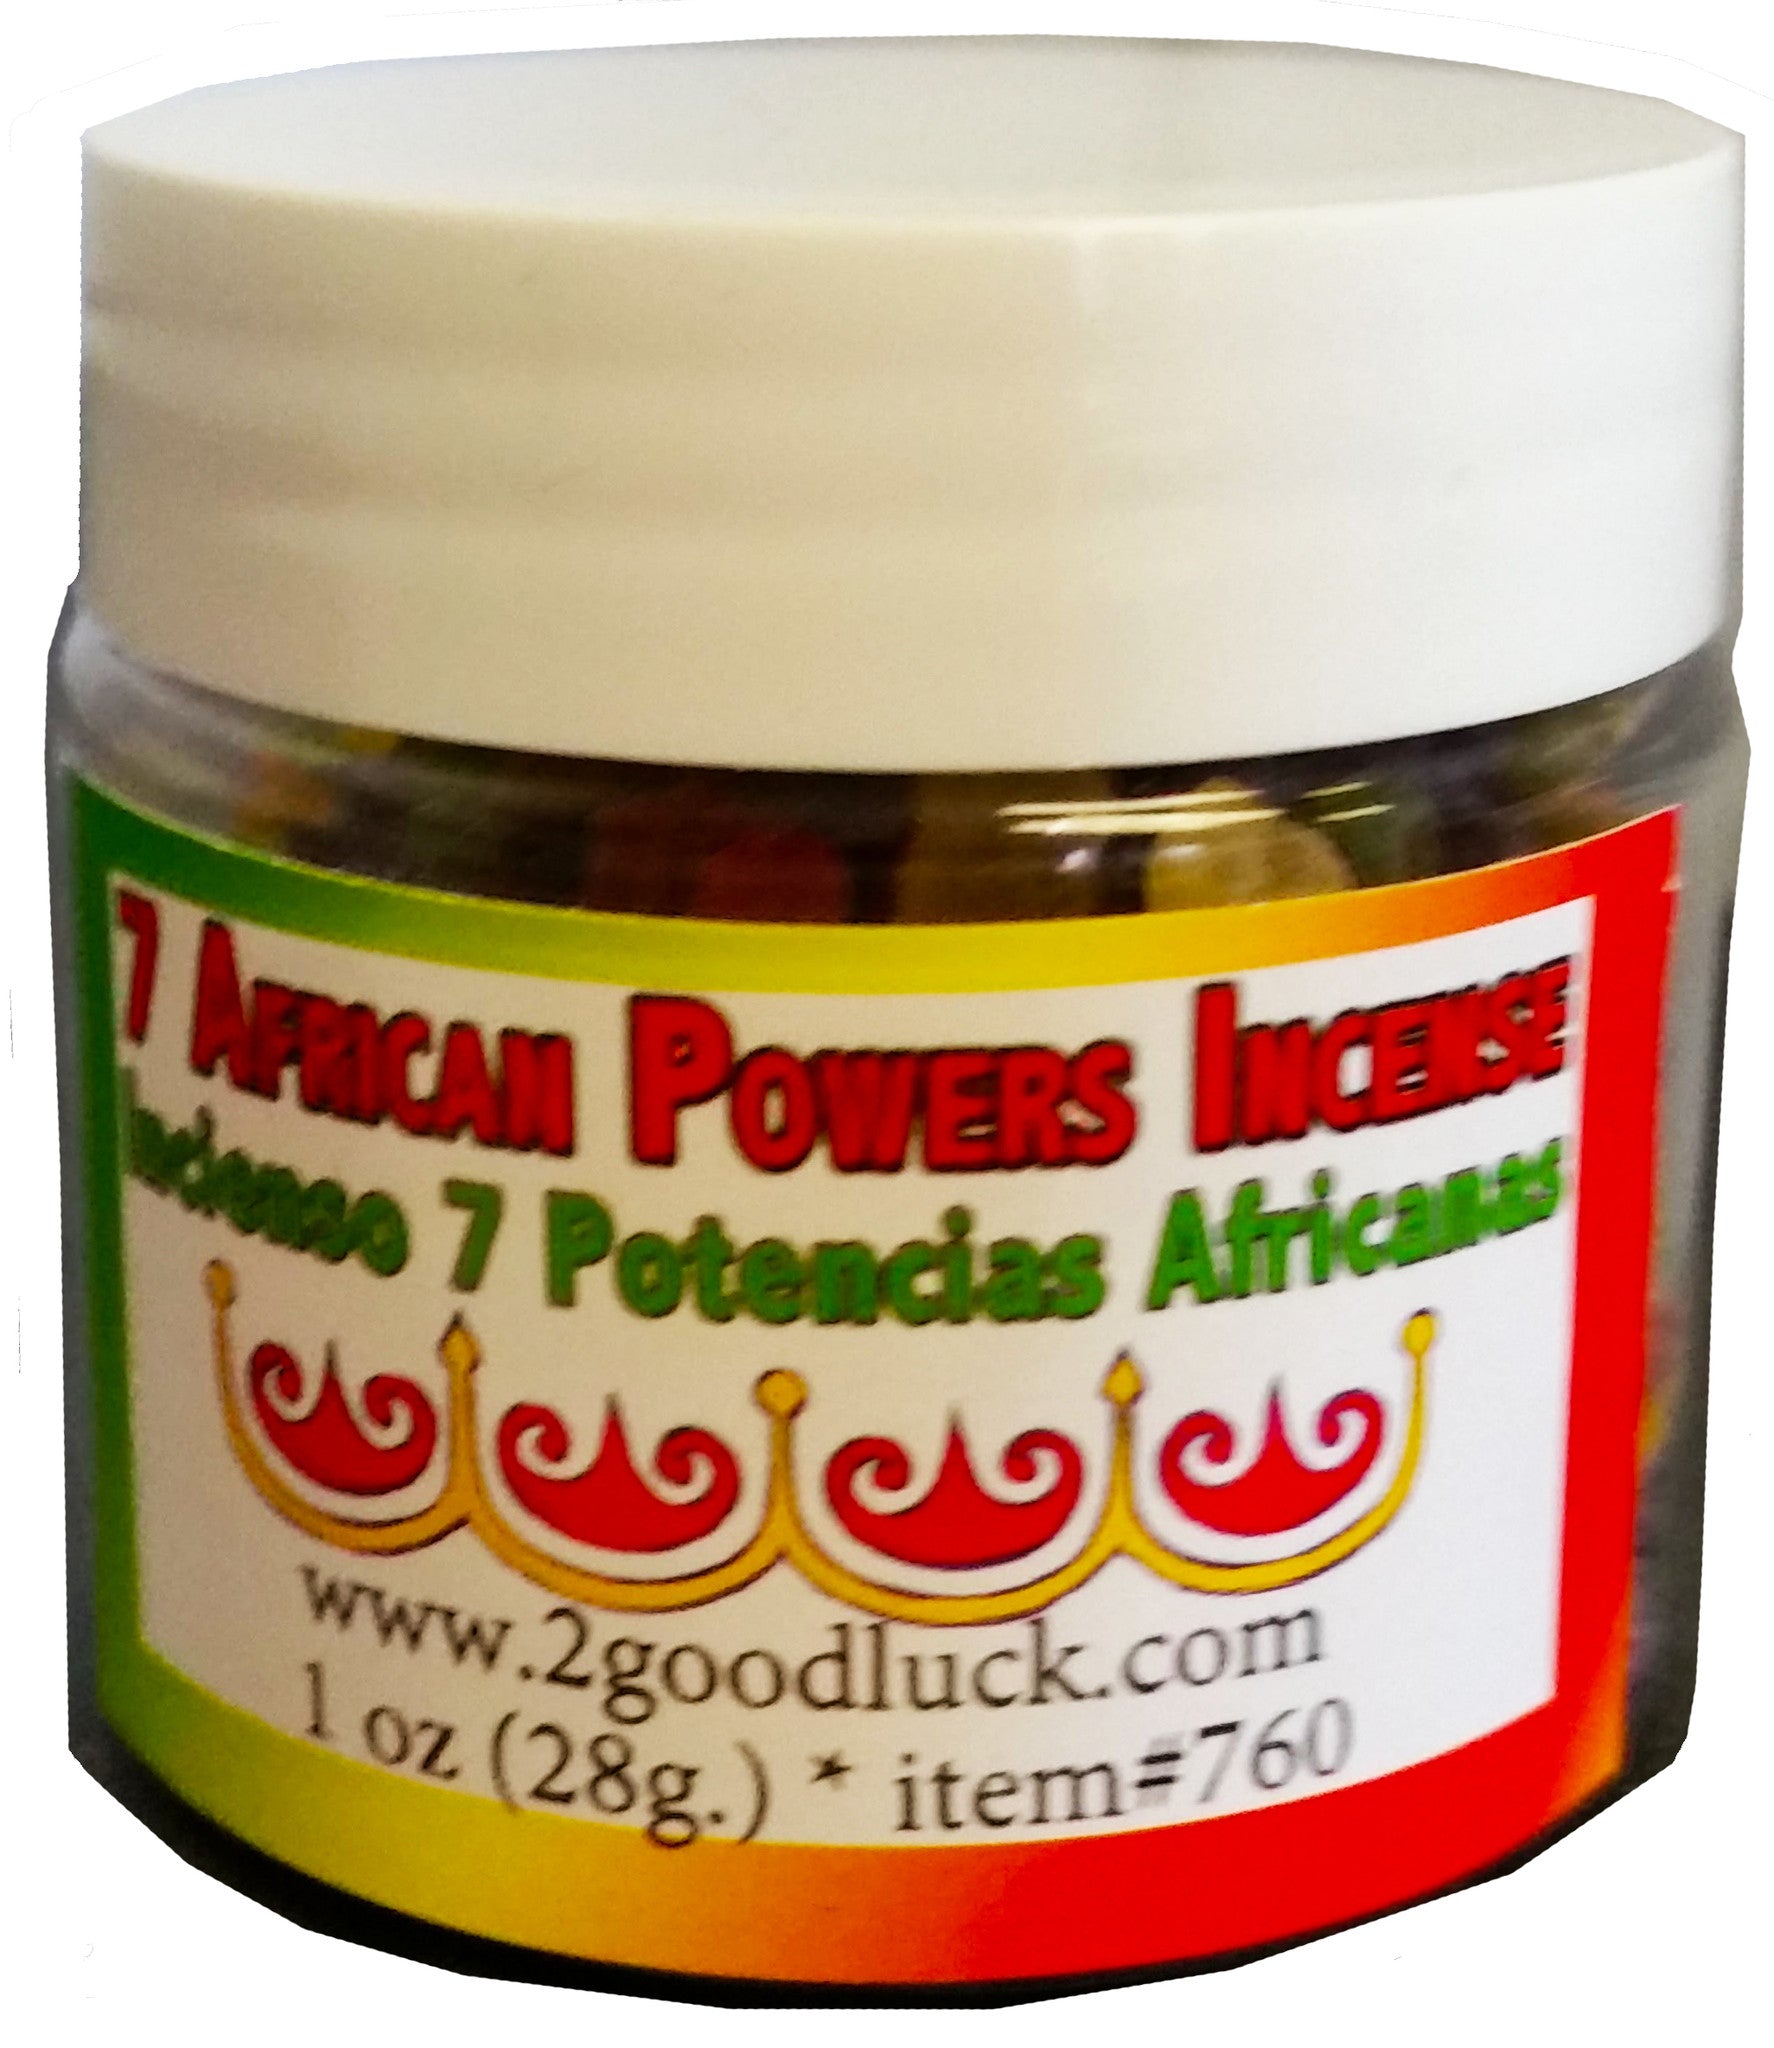 7 African Powers Incense / Incienso 7 Potencias Africanas - 2GoodLuck